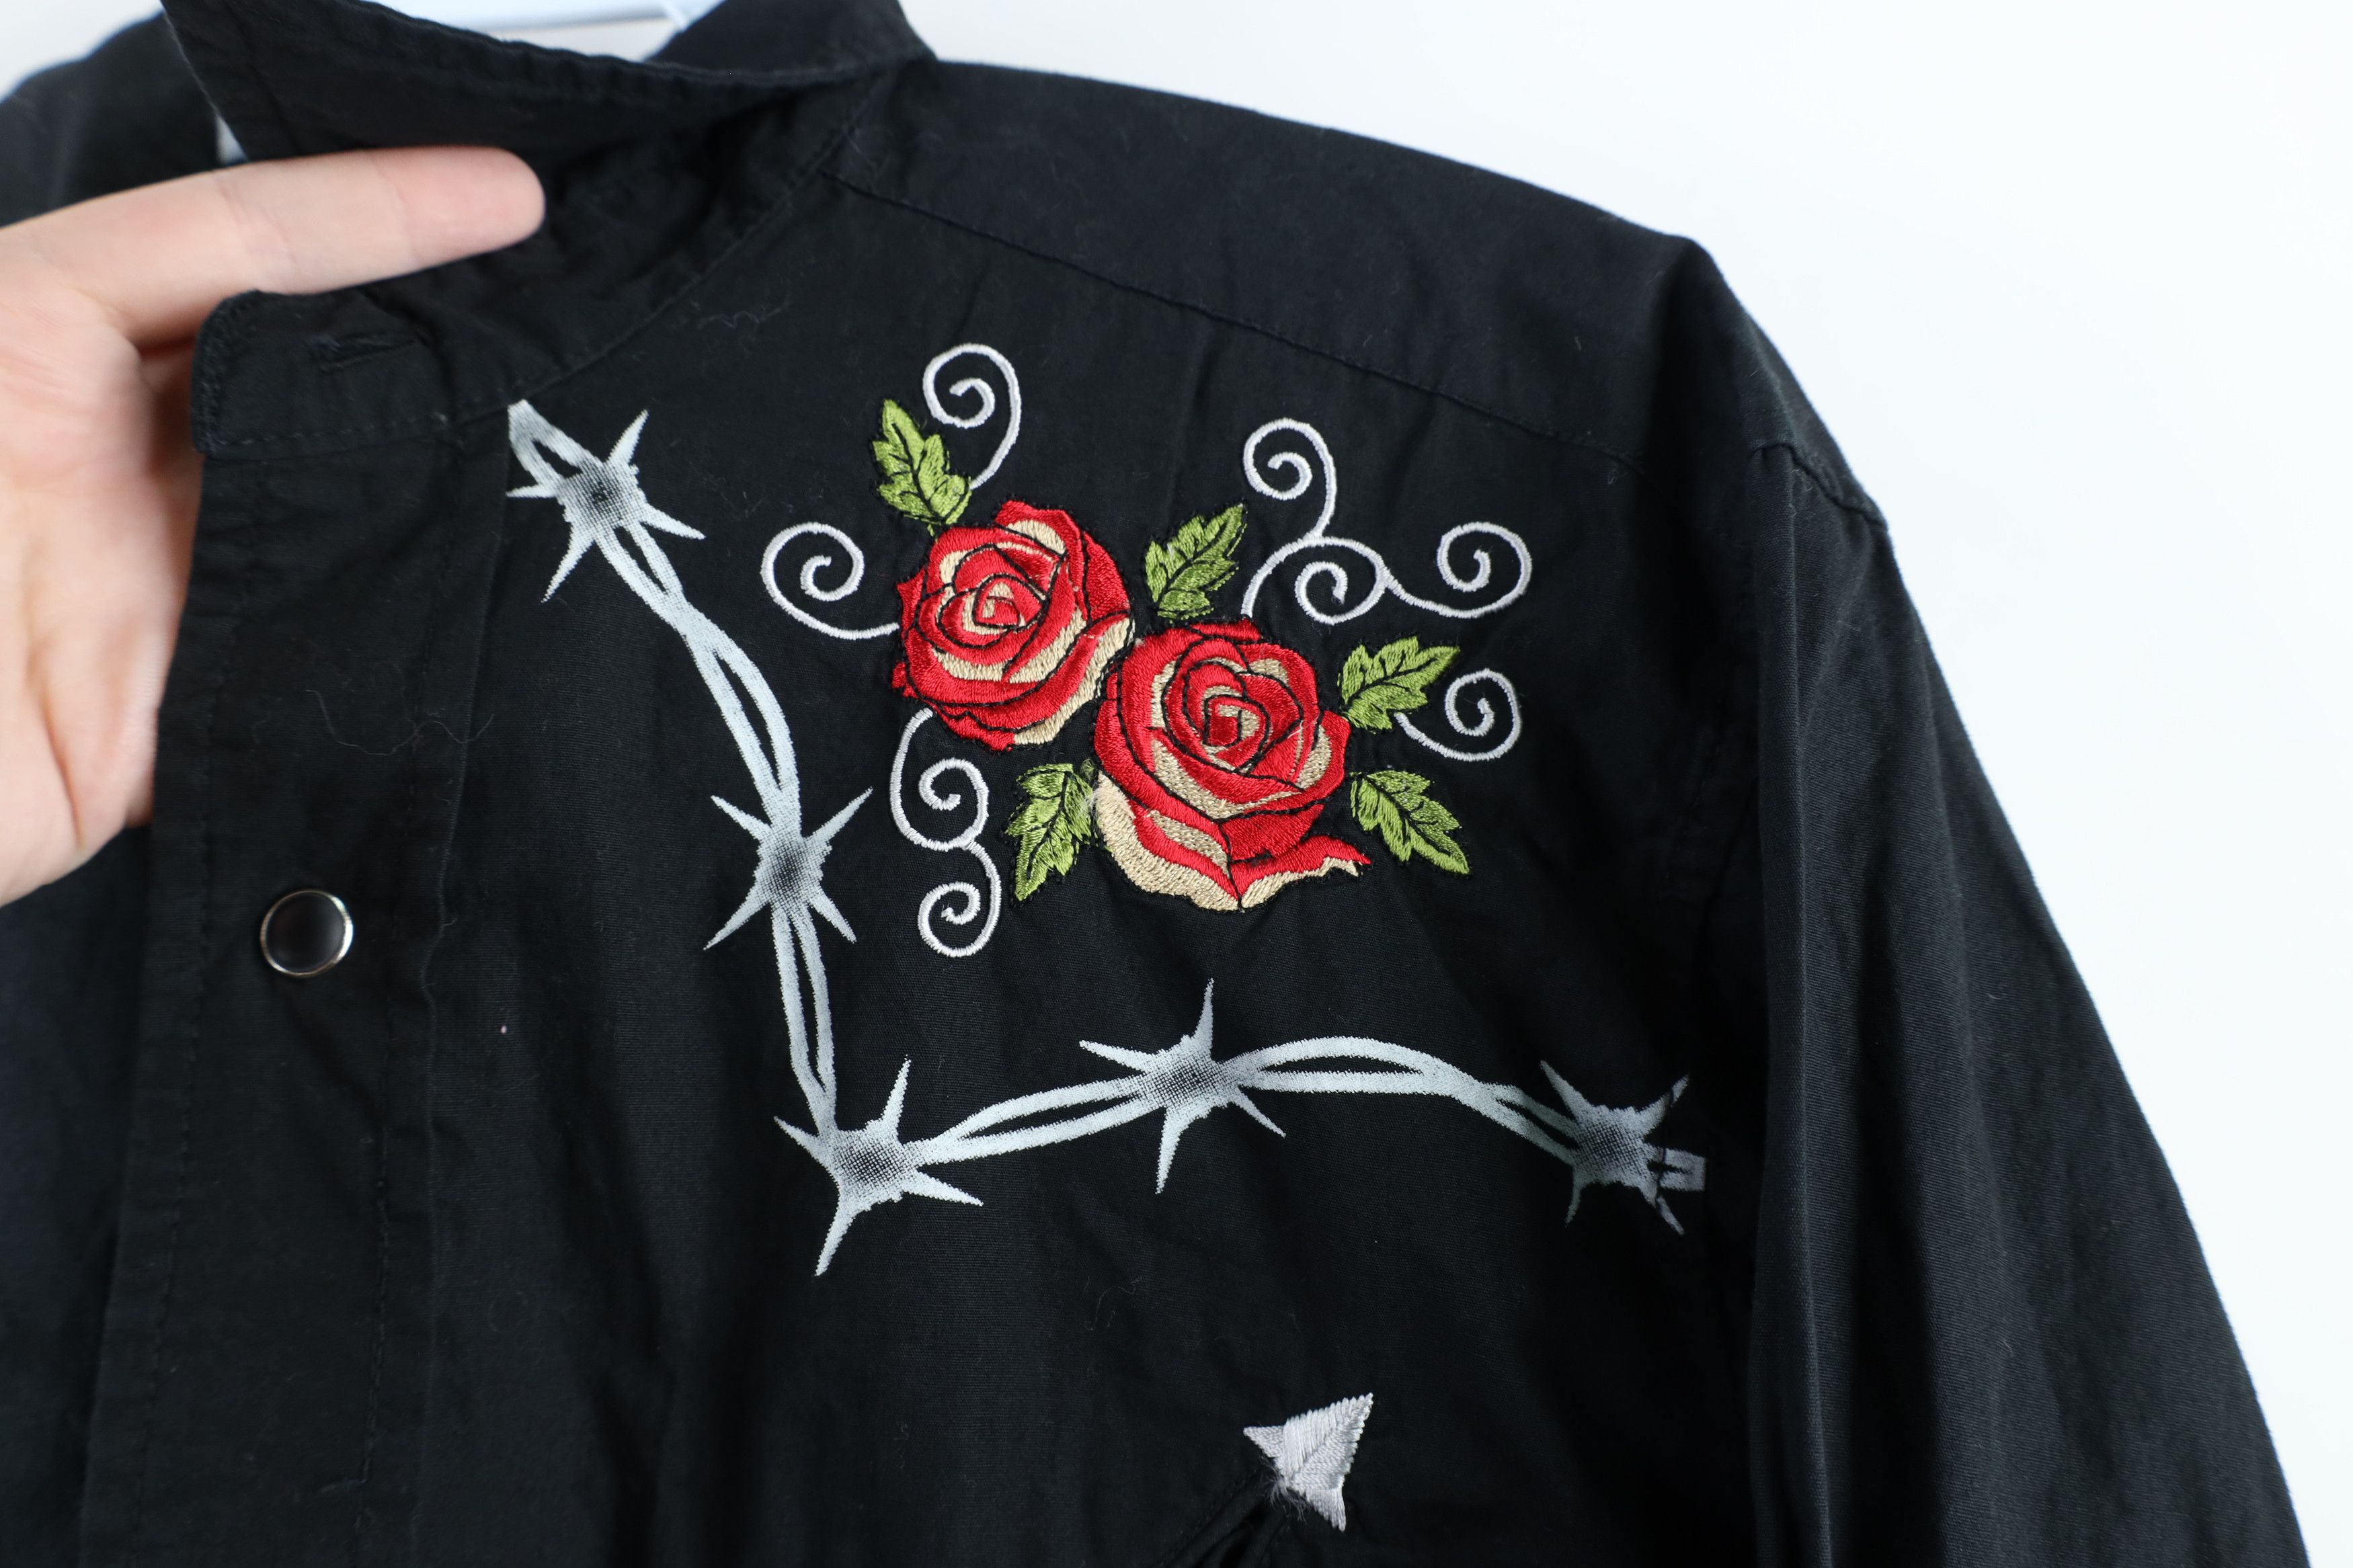 Vintage Vintage Rockabilly Rose Skull Snap Button Shirt Black Size US S / EU 44-46 / 1 - 5 Thumbnail